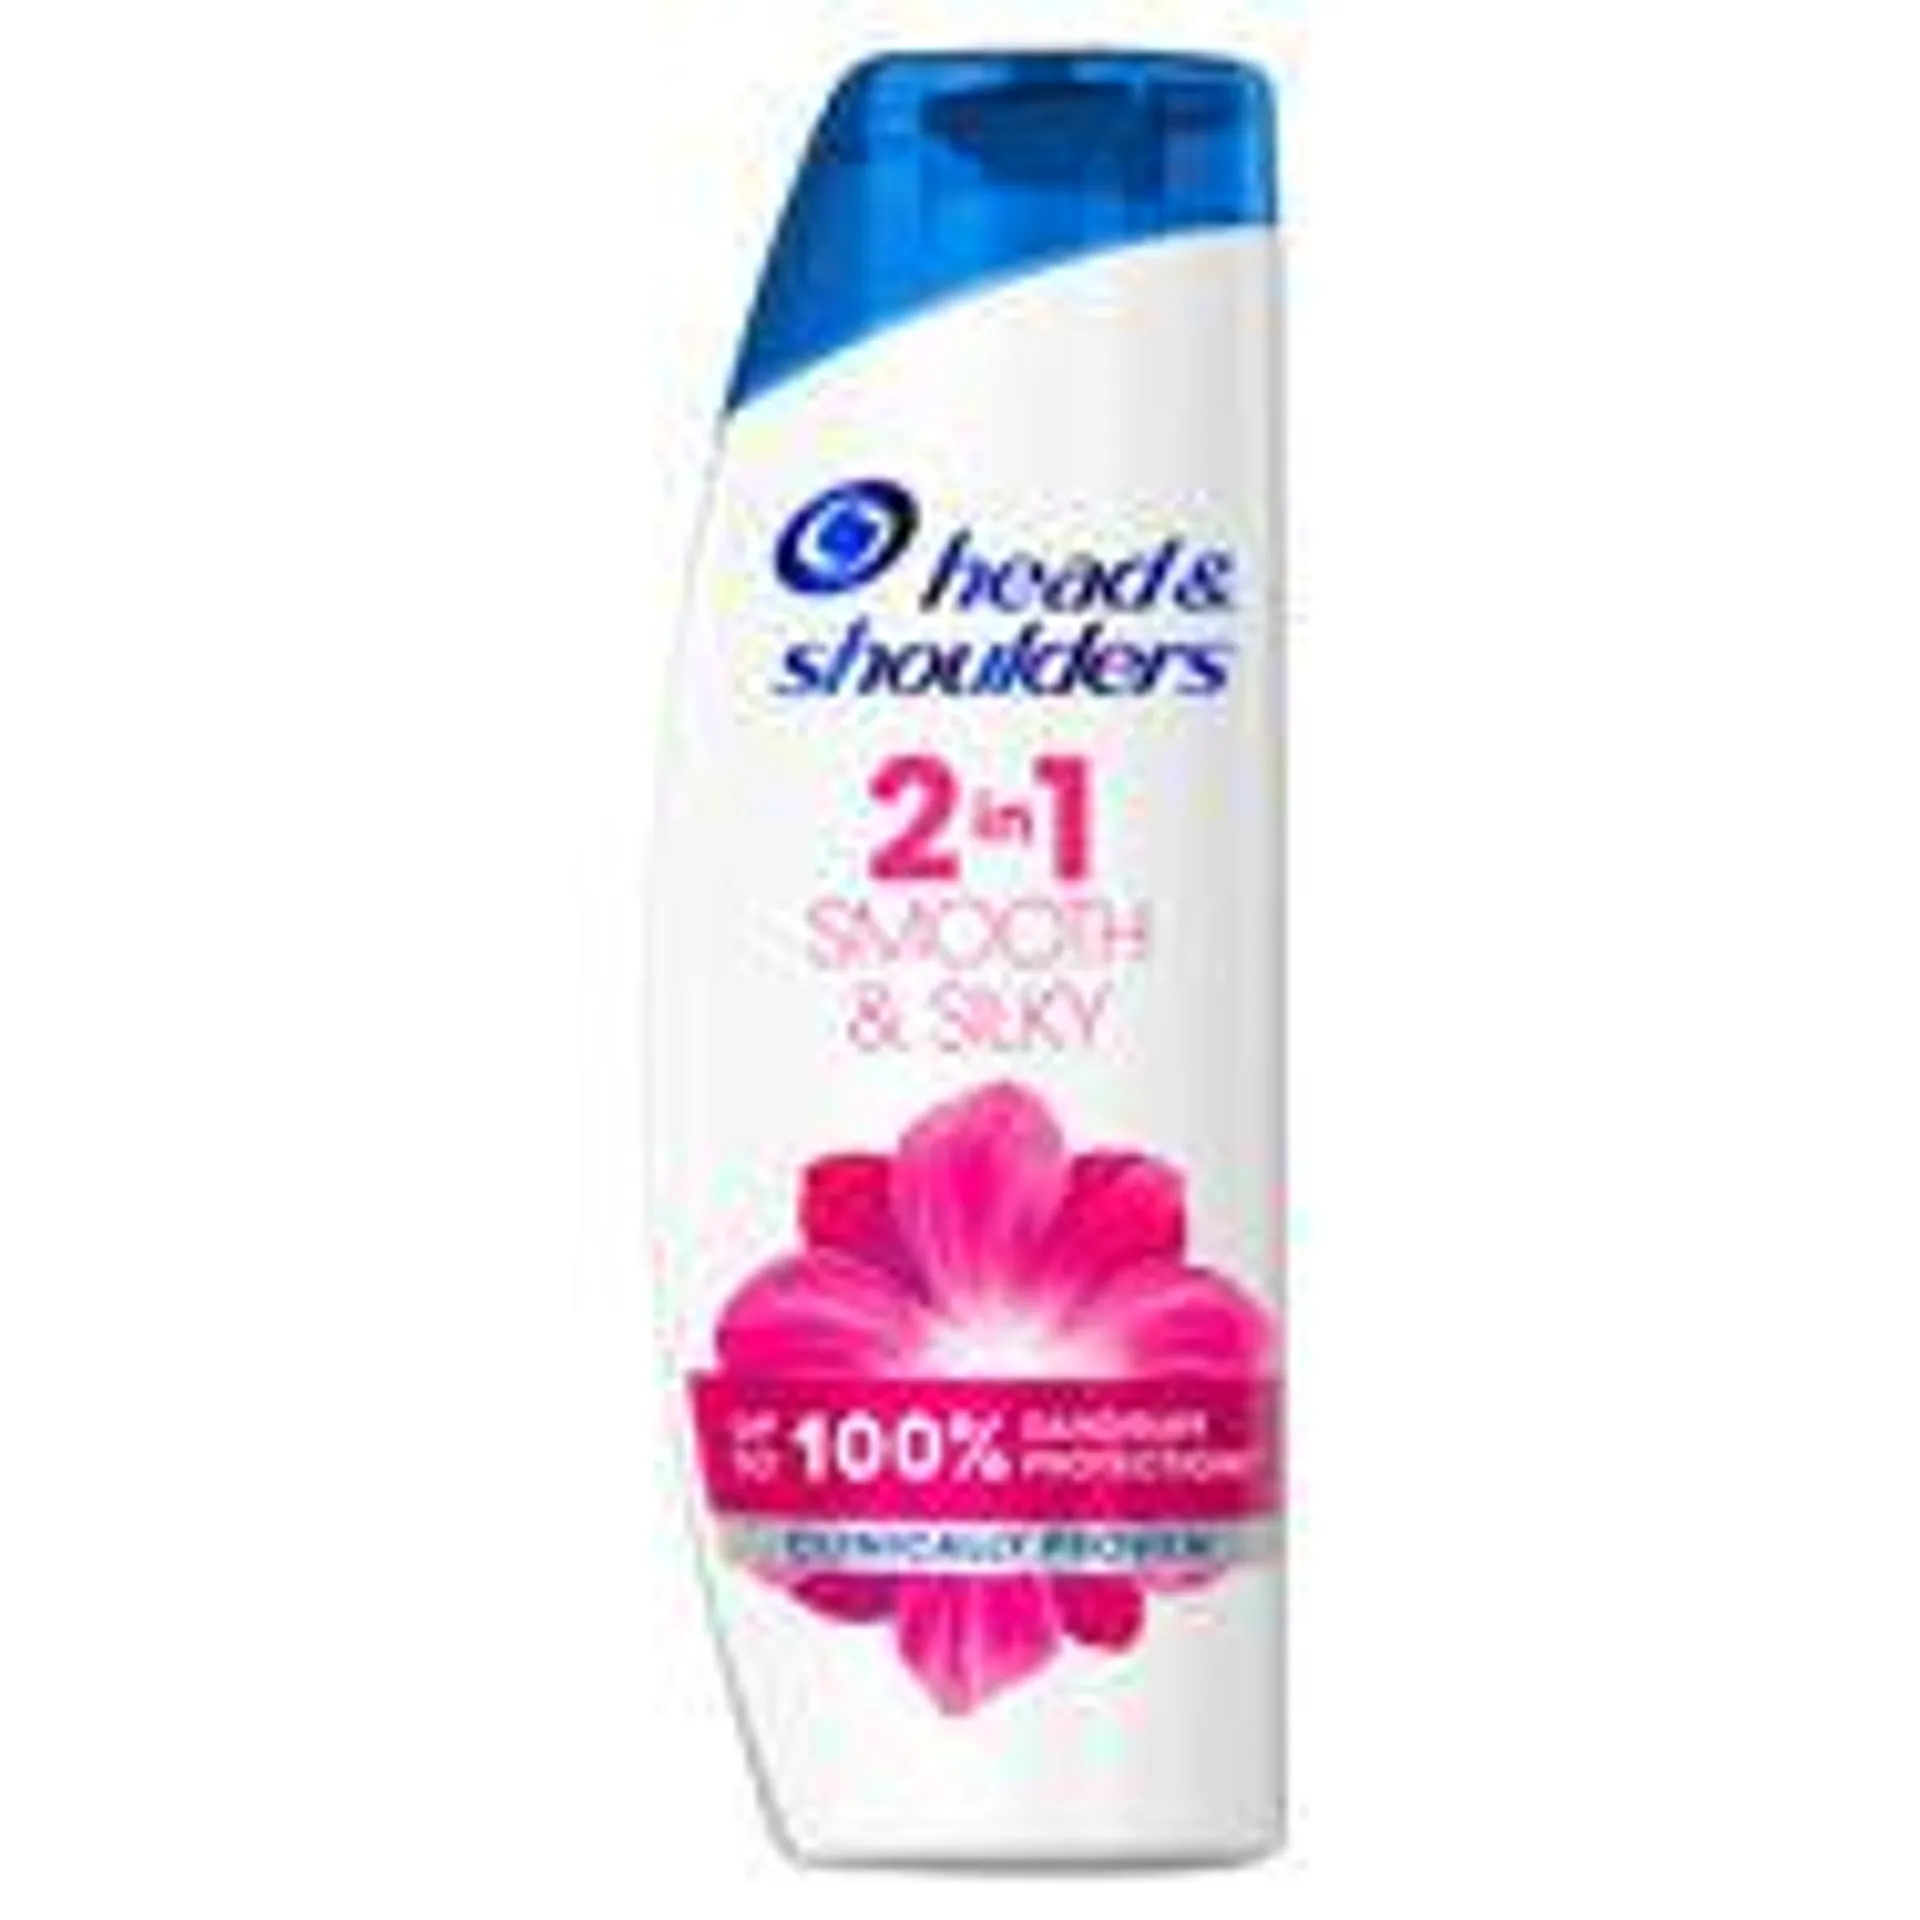 Head & Shoulders Smooth & Silky 2in1 Anti Dandruff Shampoo